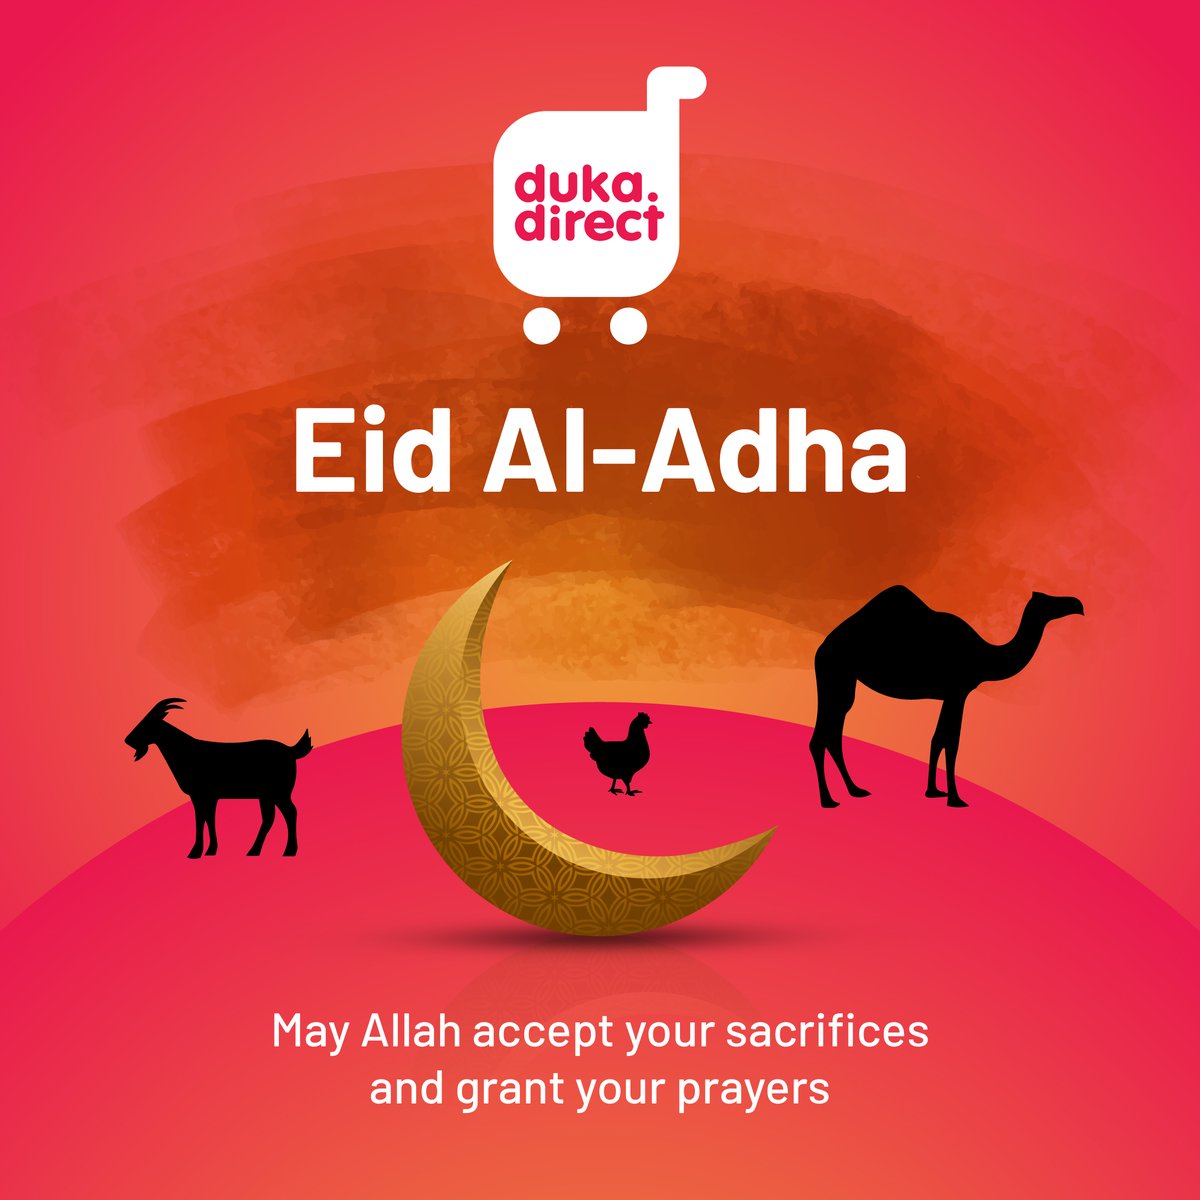 Eid Mubarak from duka.direct family! Get your Eid meals delivered. Order from 150+ restaurants & home kitchens.
#fooddelivery #ecommerceapp #EidUlAdha2023 #EidAlAdhaMubarak #KilaKituKipo #runsonselcom #daressalaam